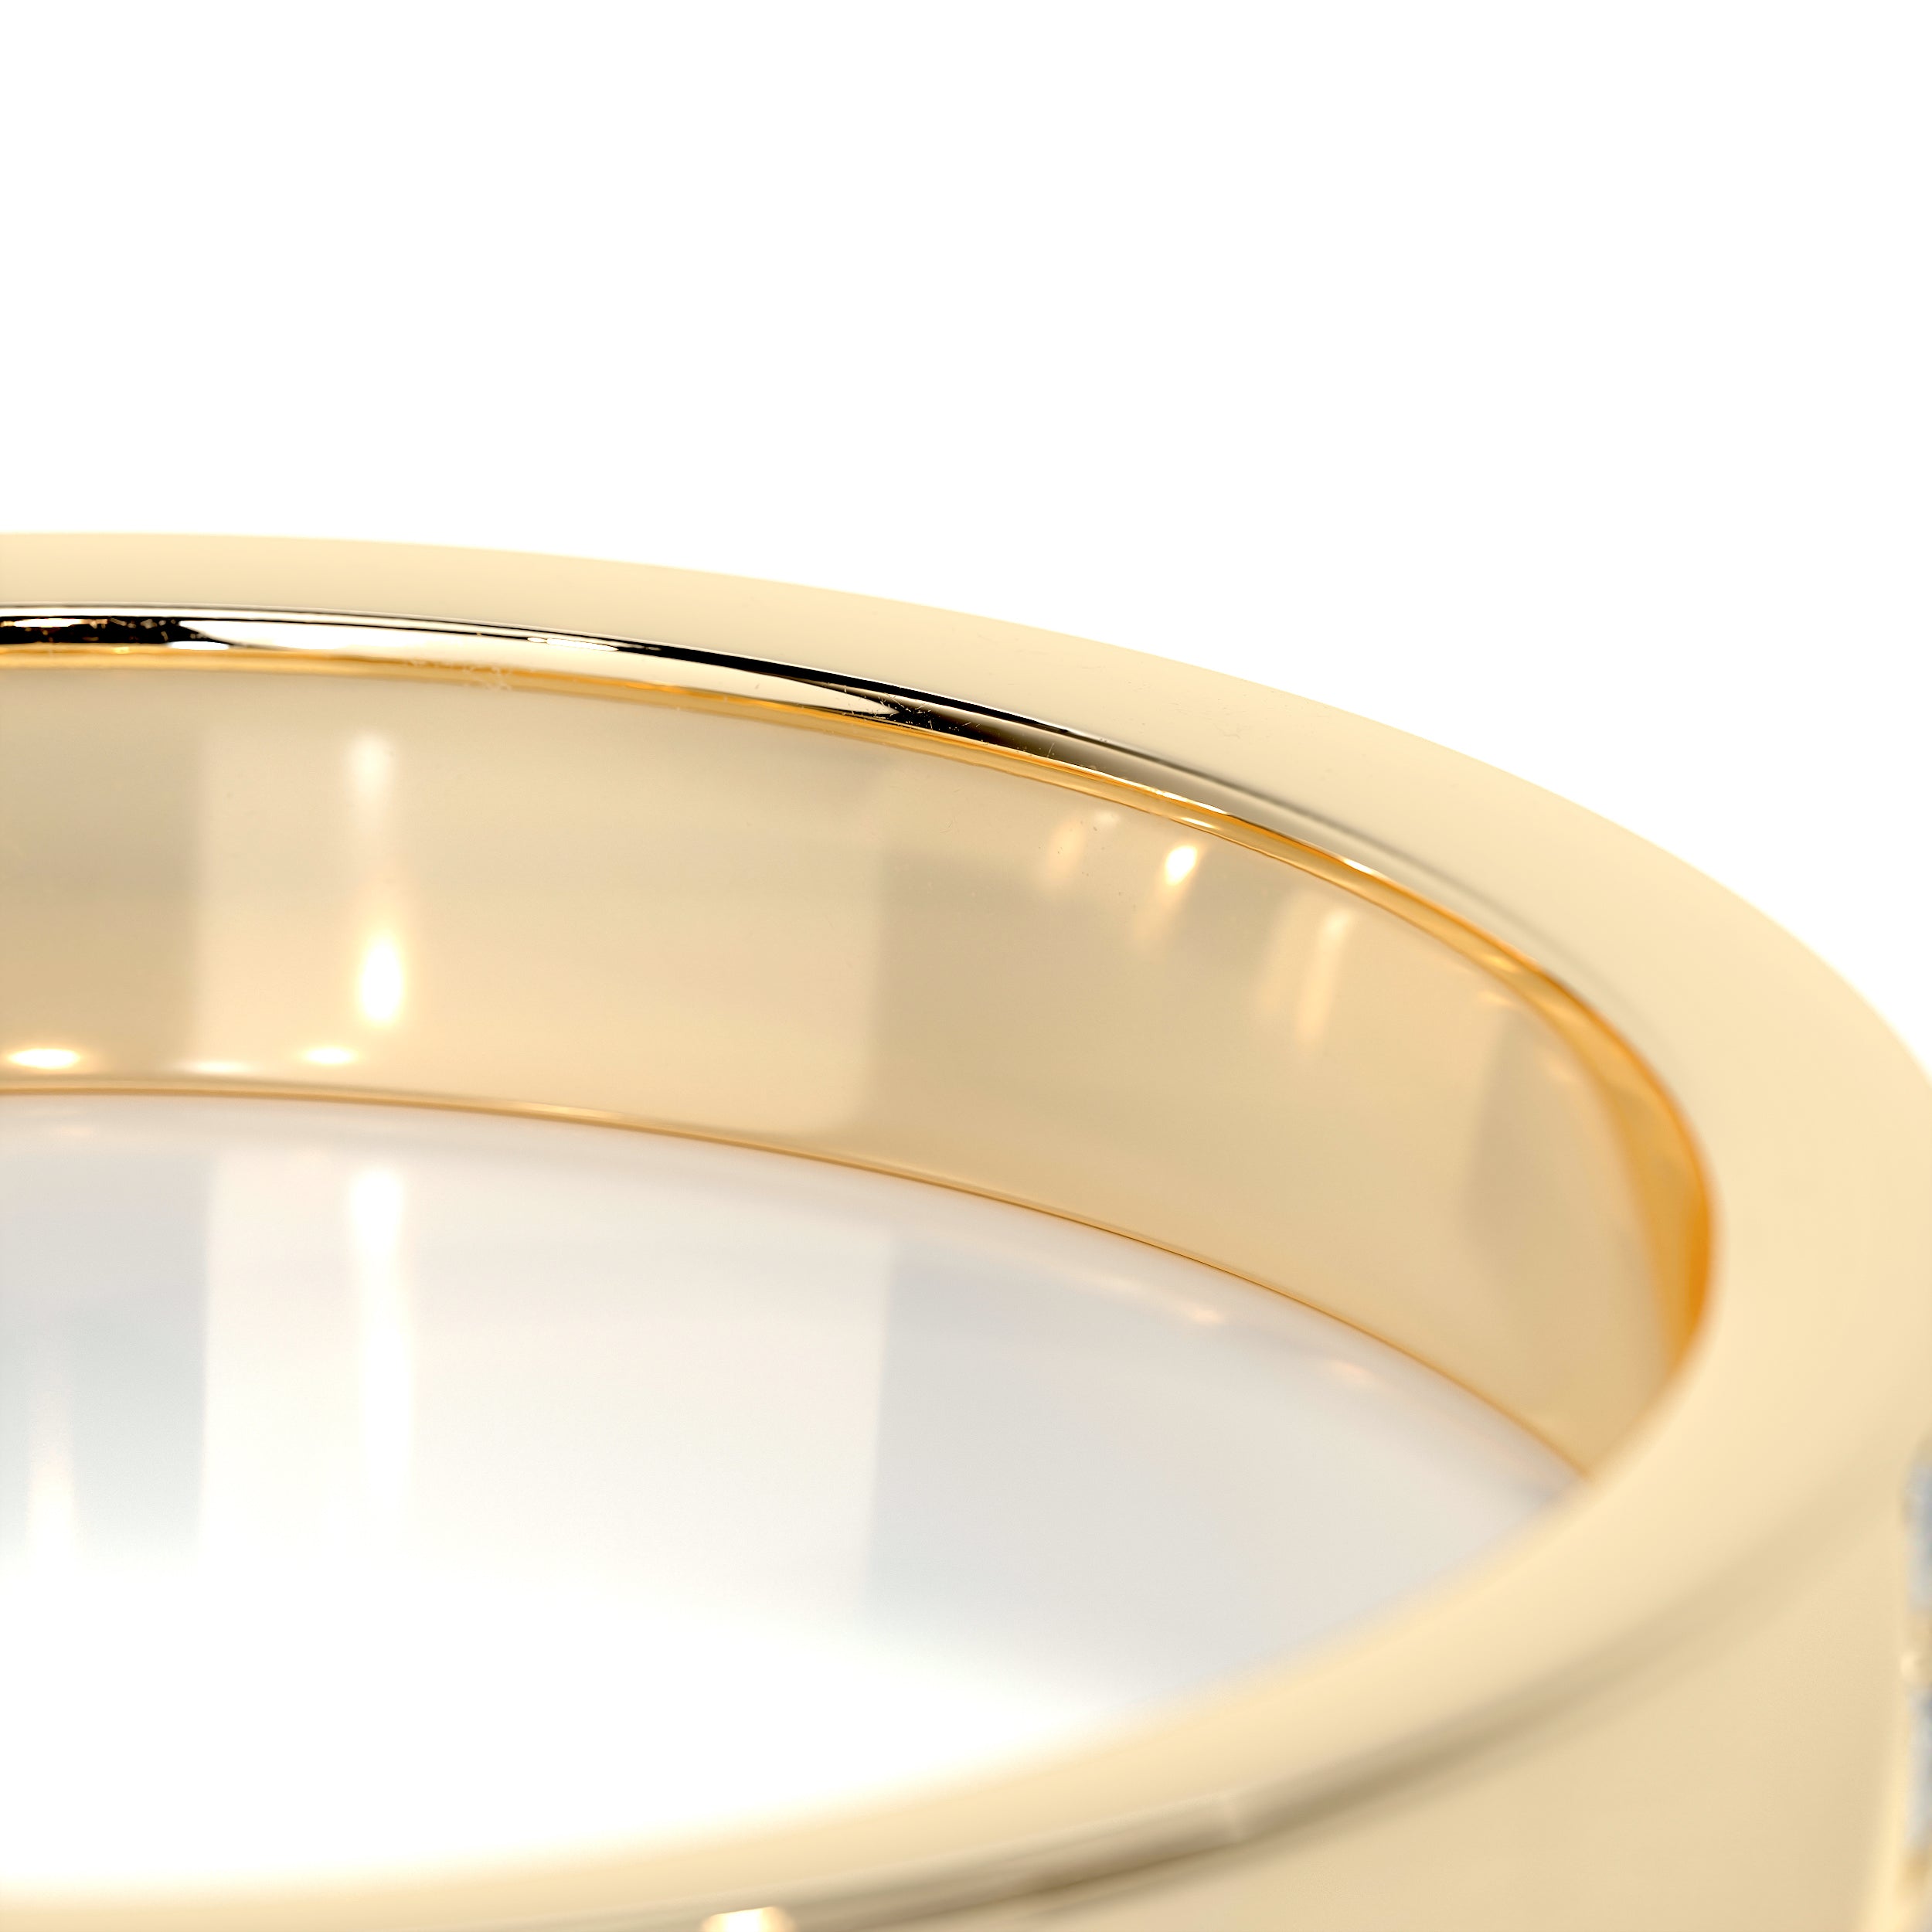 June Diamond Wedding Ring   (0.2 Carat) - 18K Yellow Gold